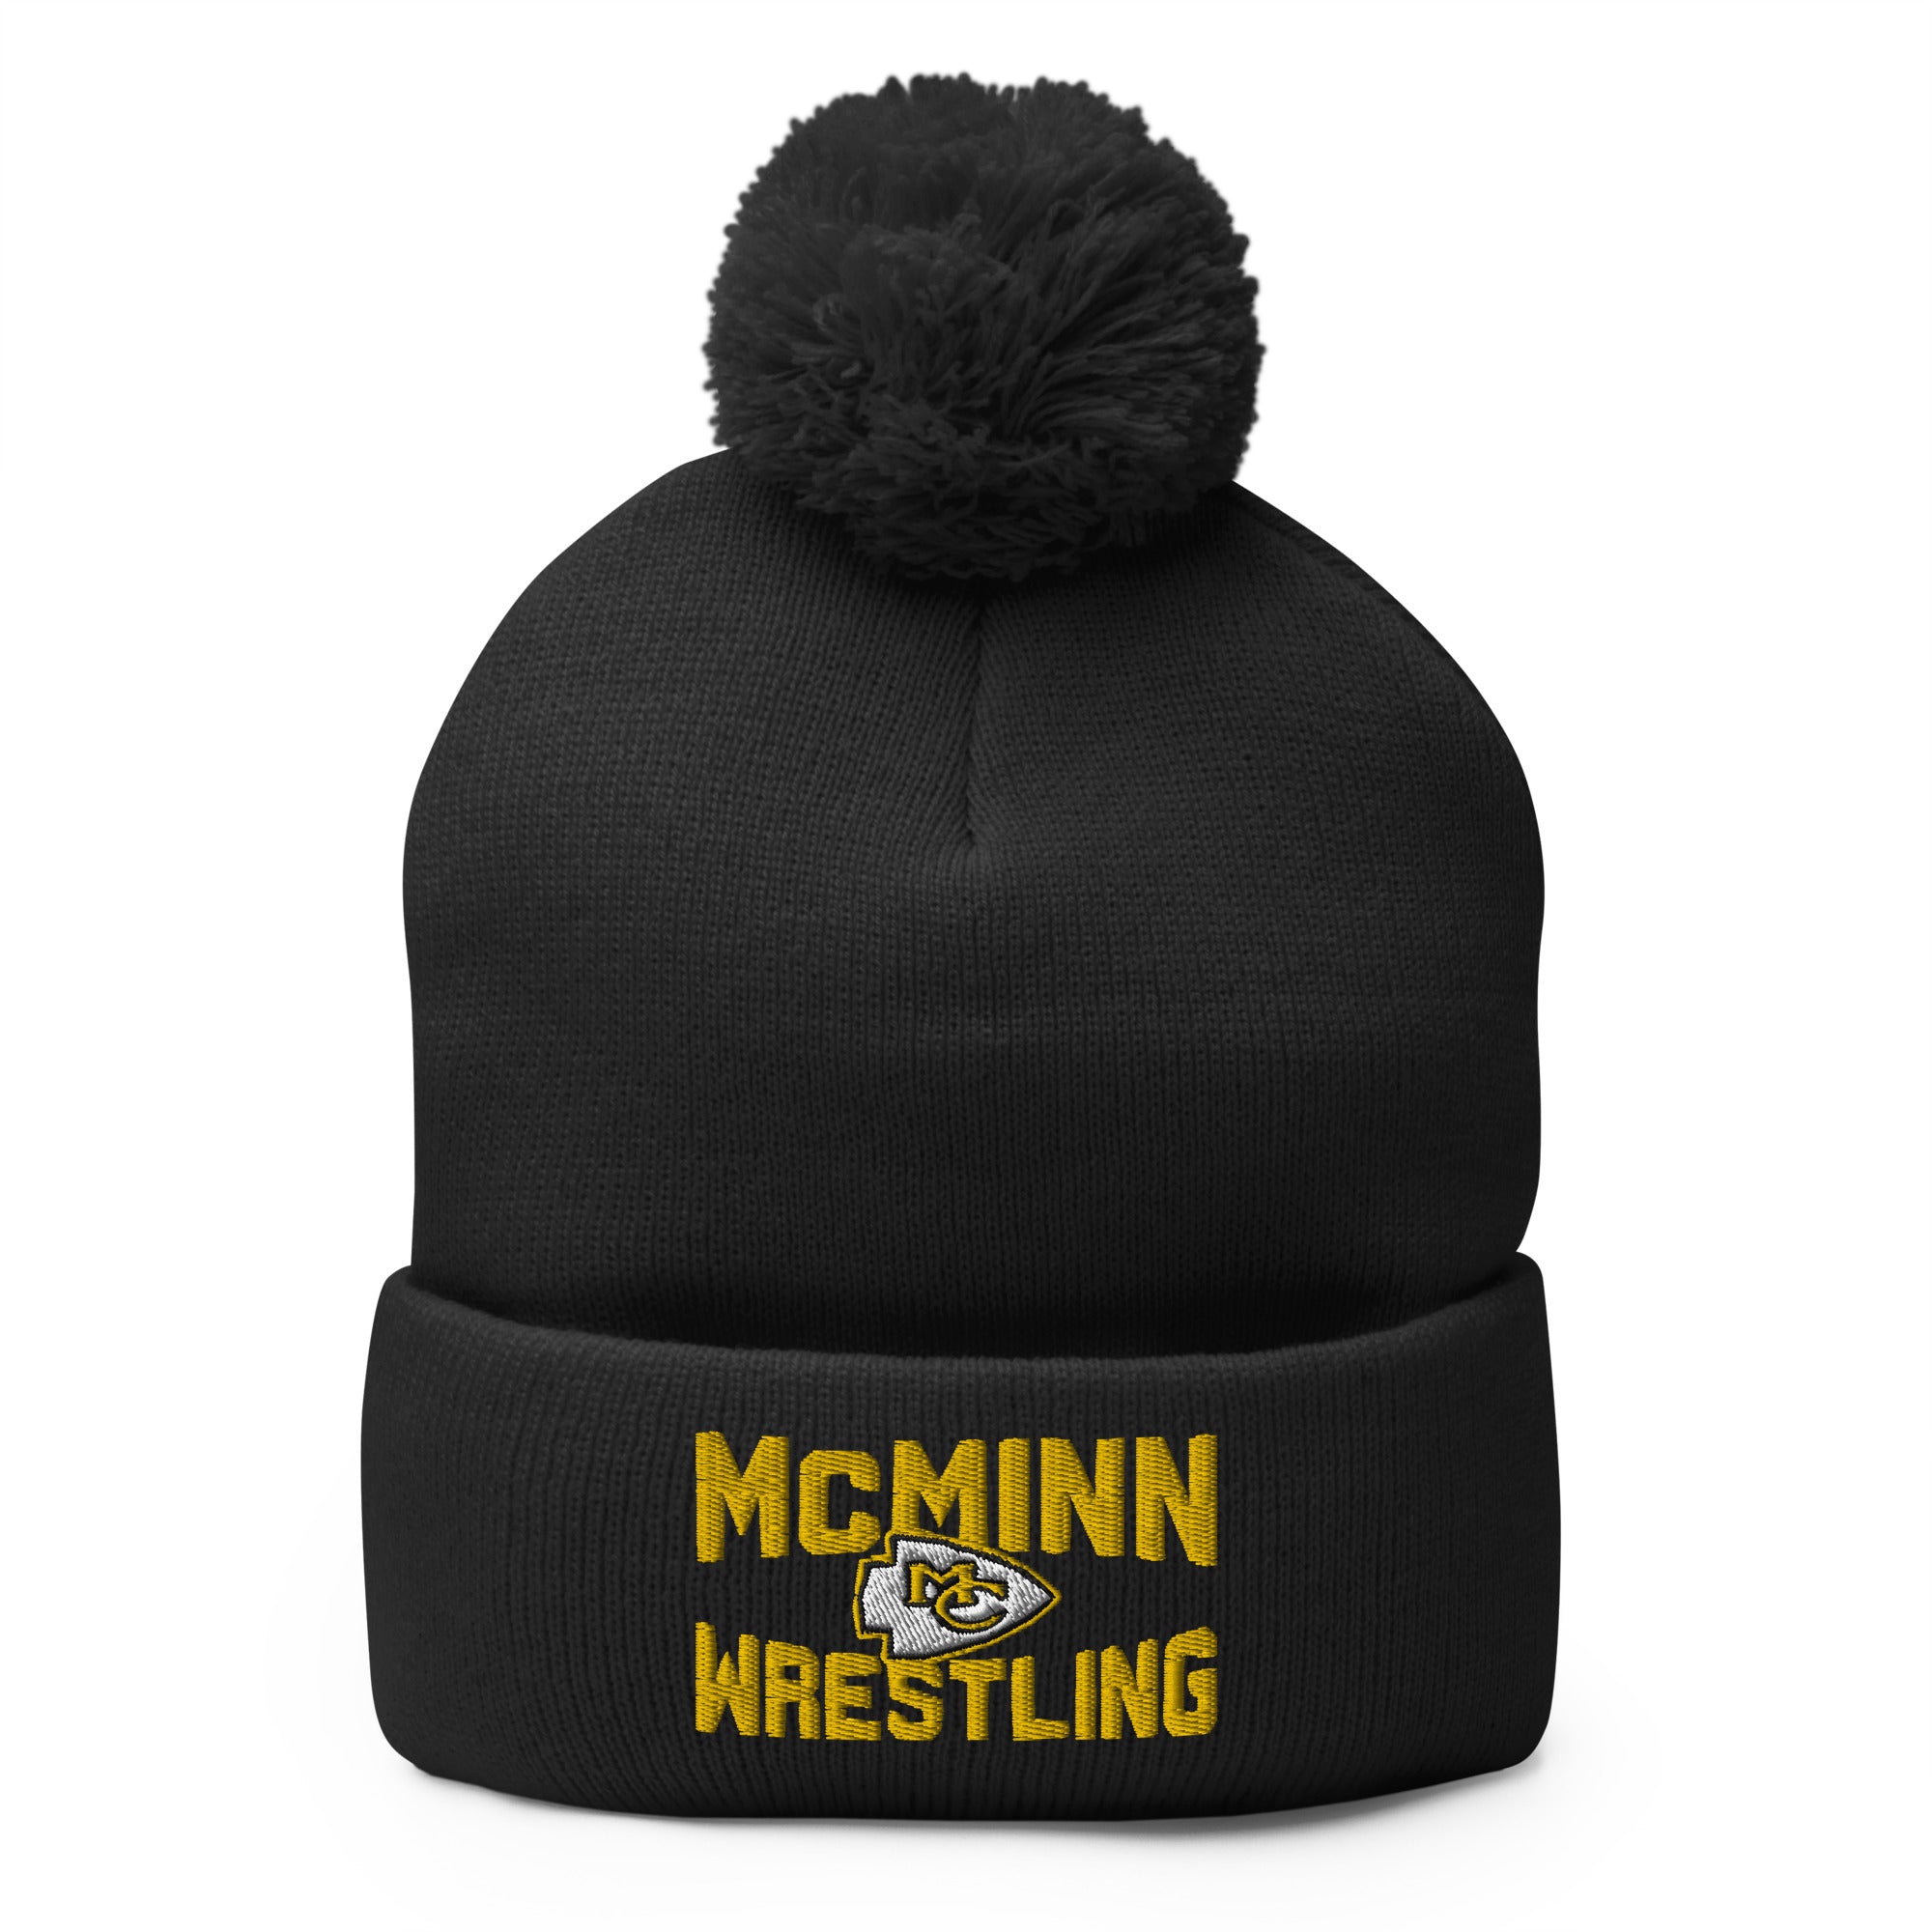 McMinn High School Wrestling  Black Pom-Pom Knit Cap